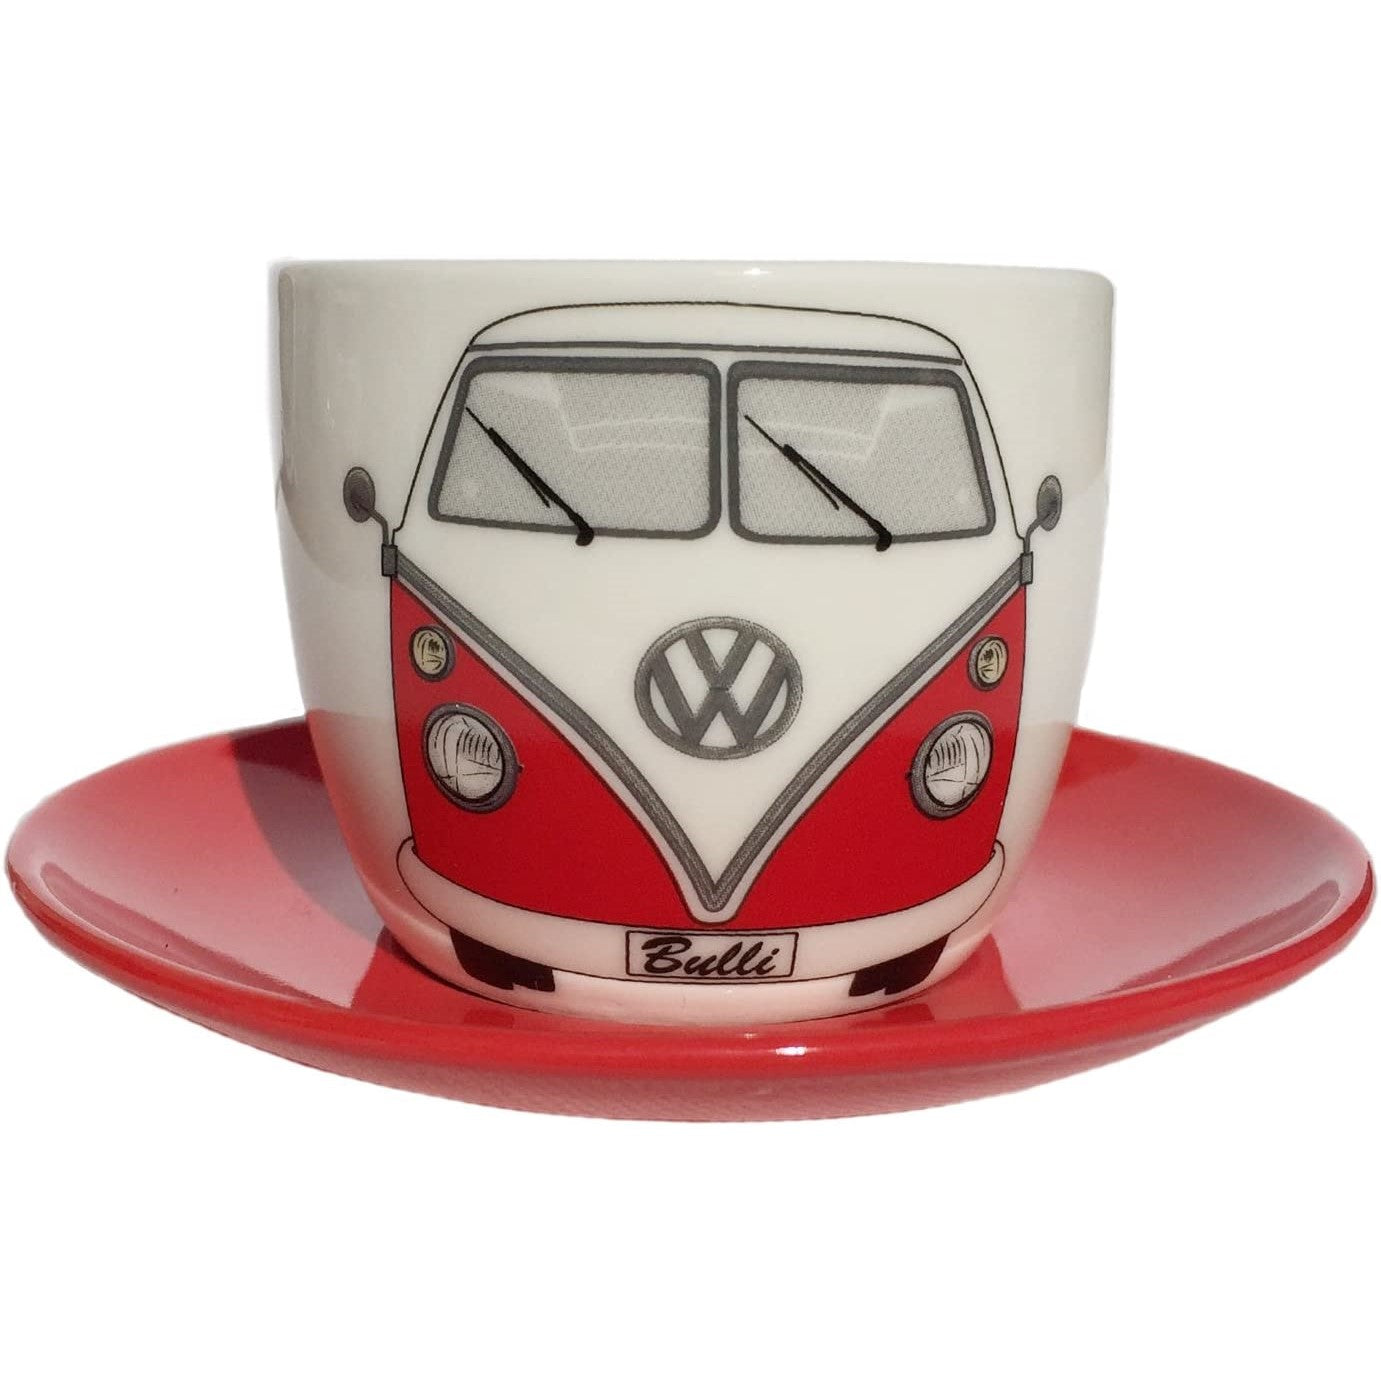 VW GTI Espresso Cups Set of 2 100ml